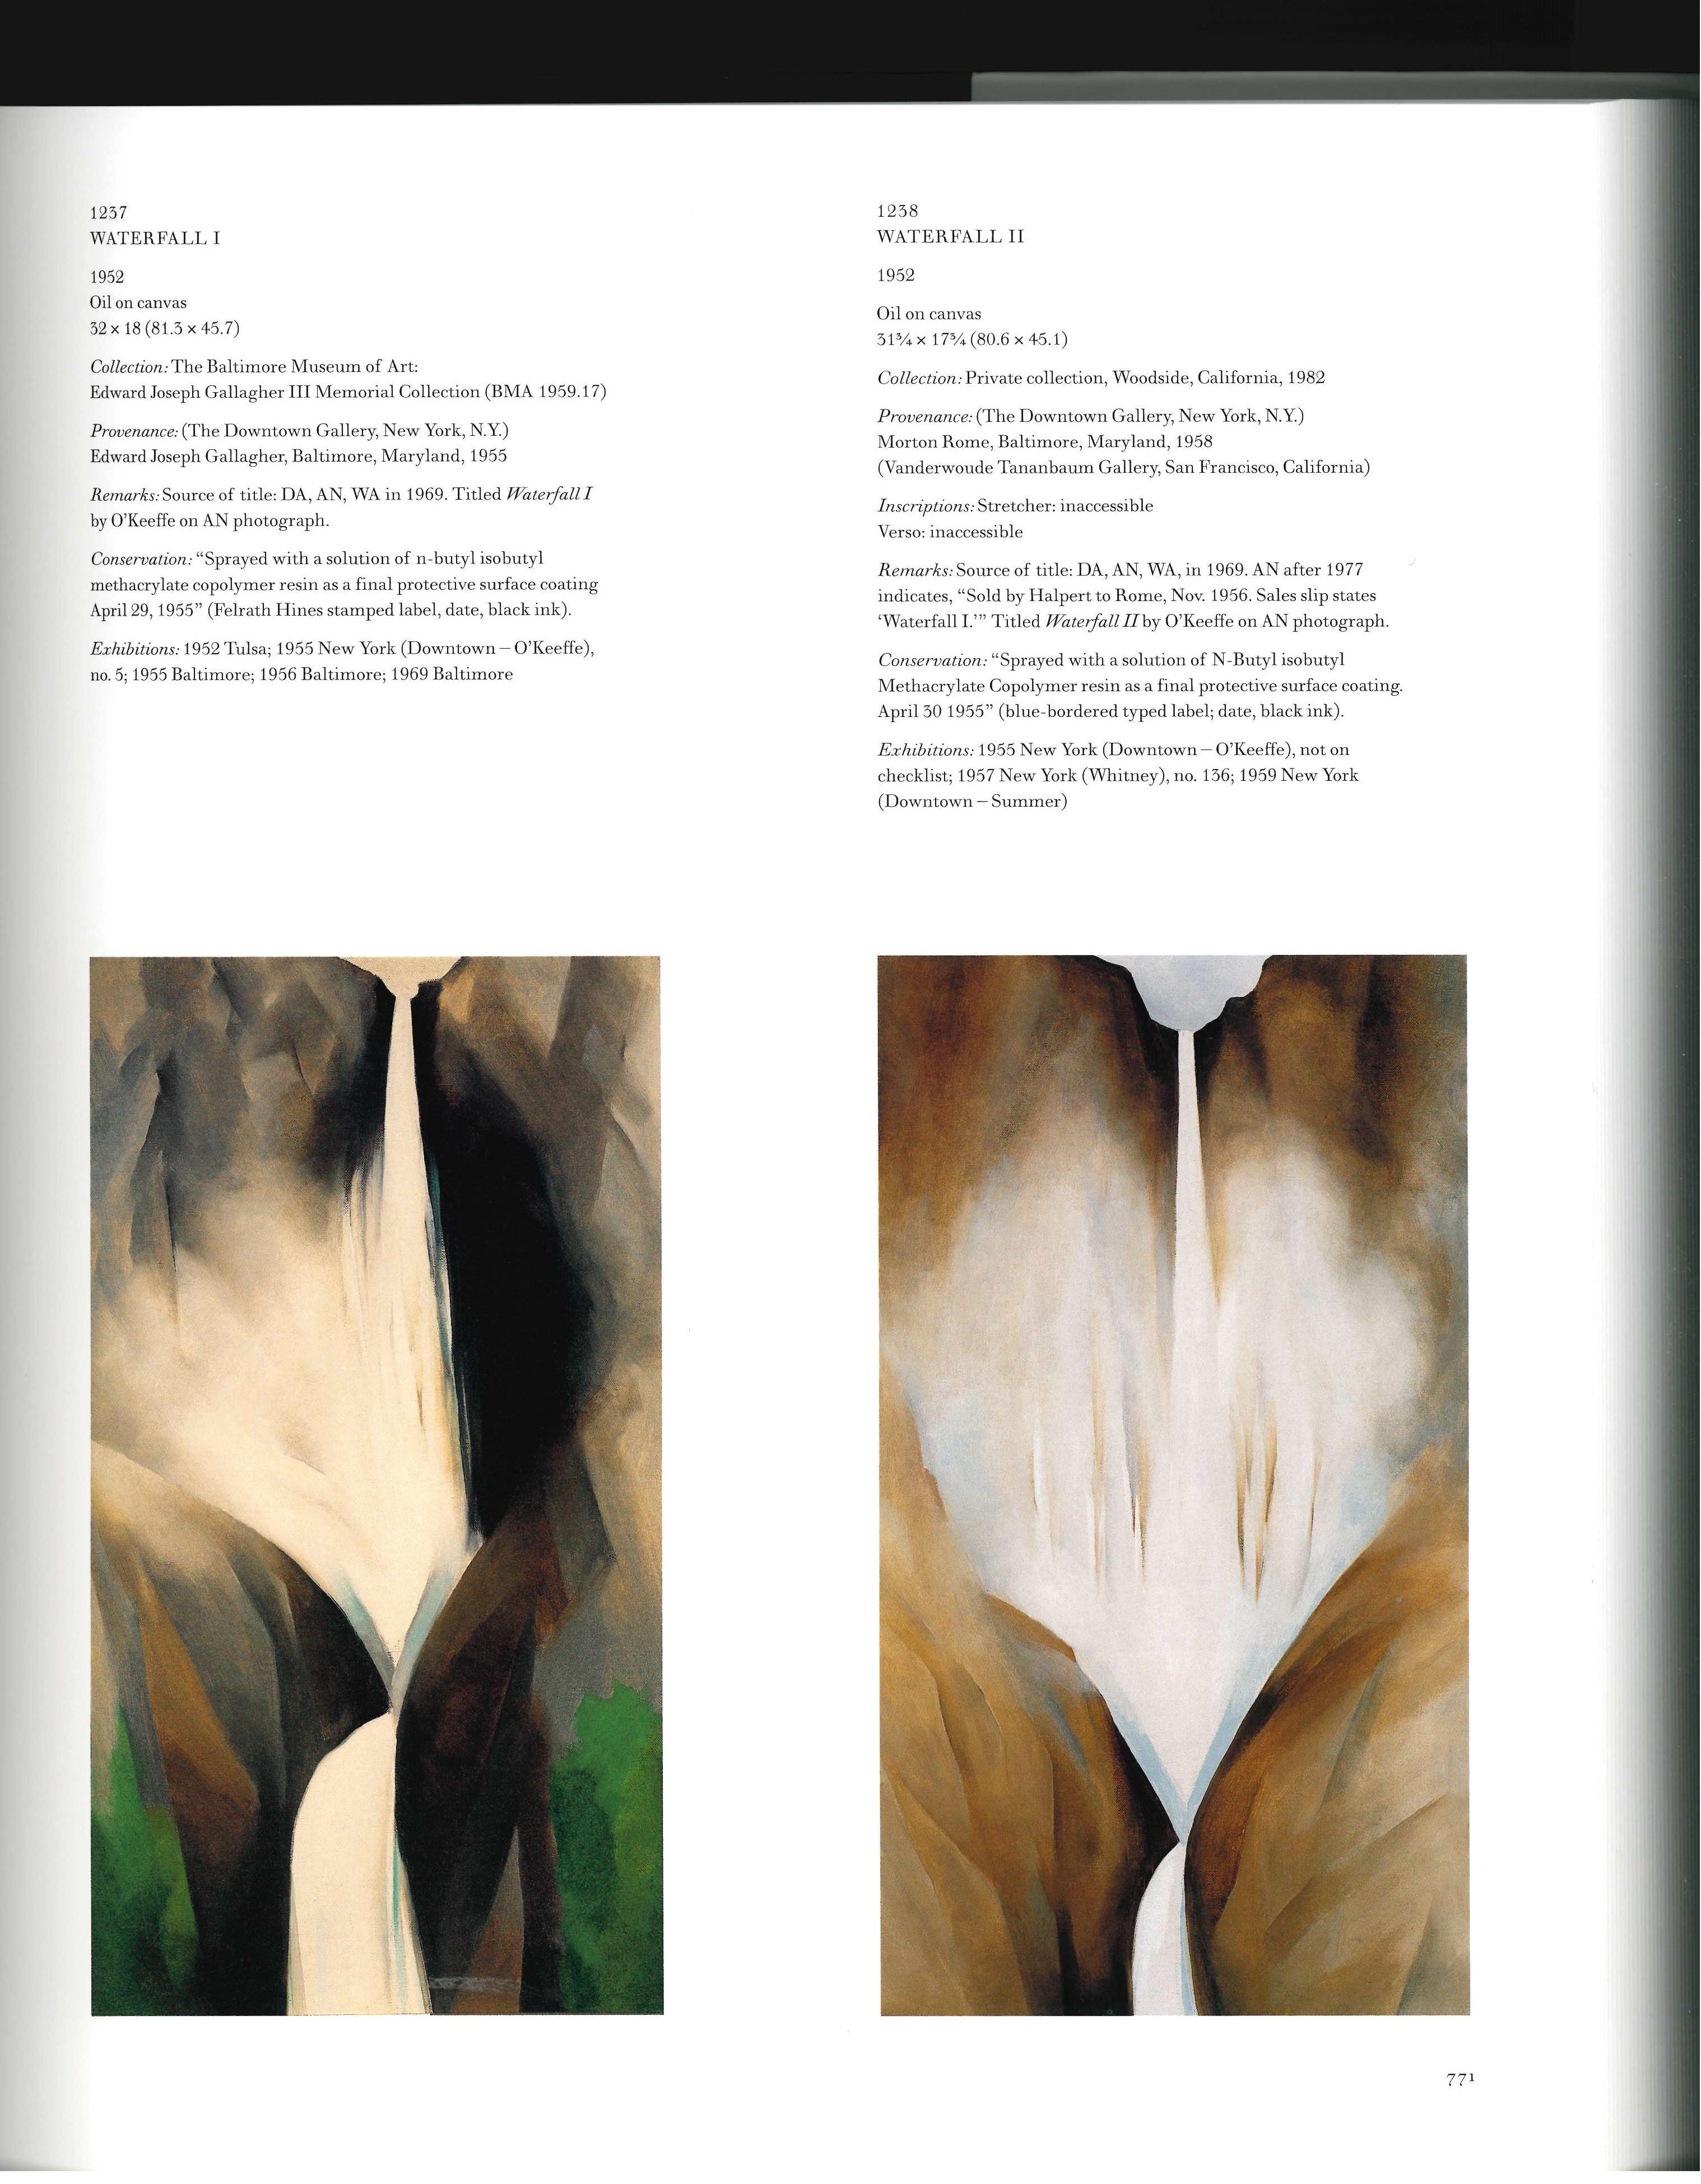 Paper Georgia O'Keeffe: Catalogue Raisonne by Barbara Buhler Lynes (Books) For Sale